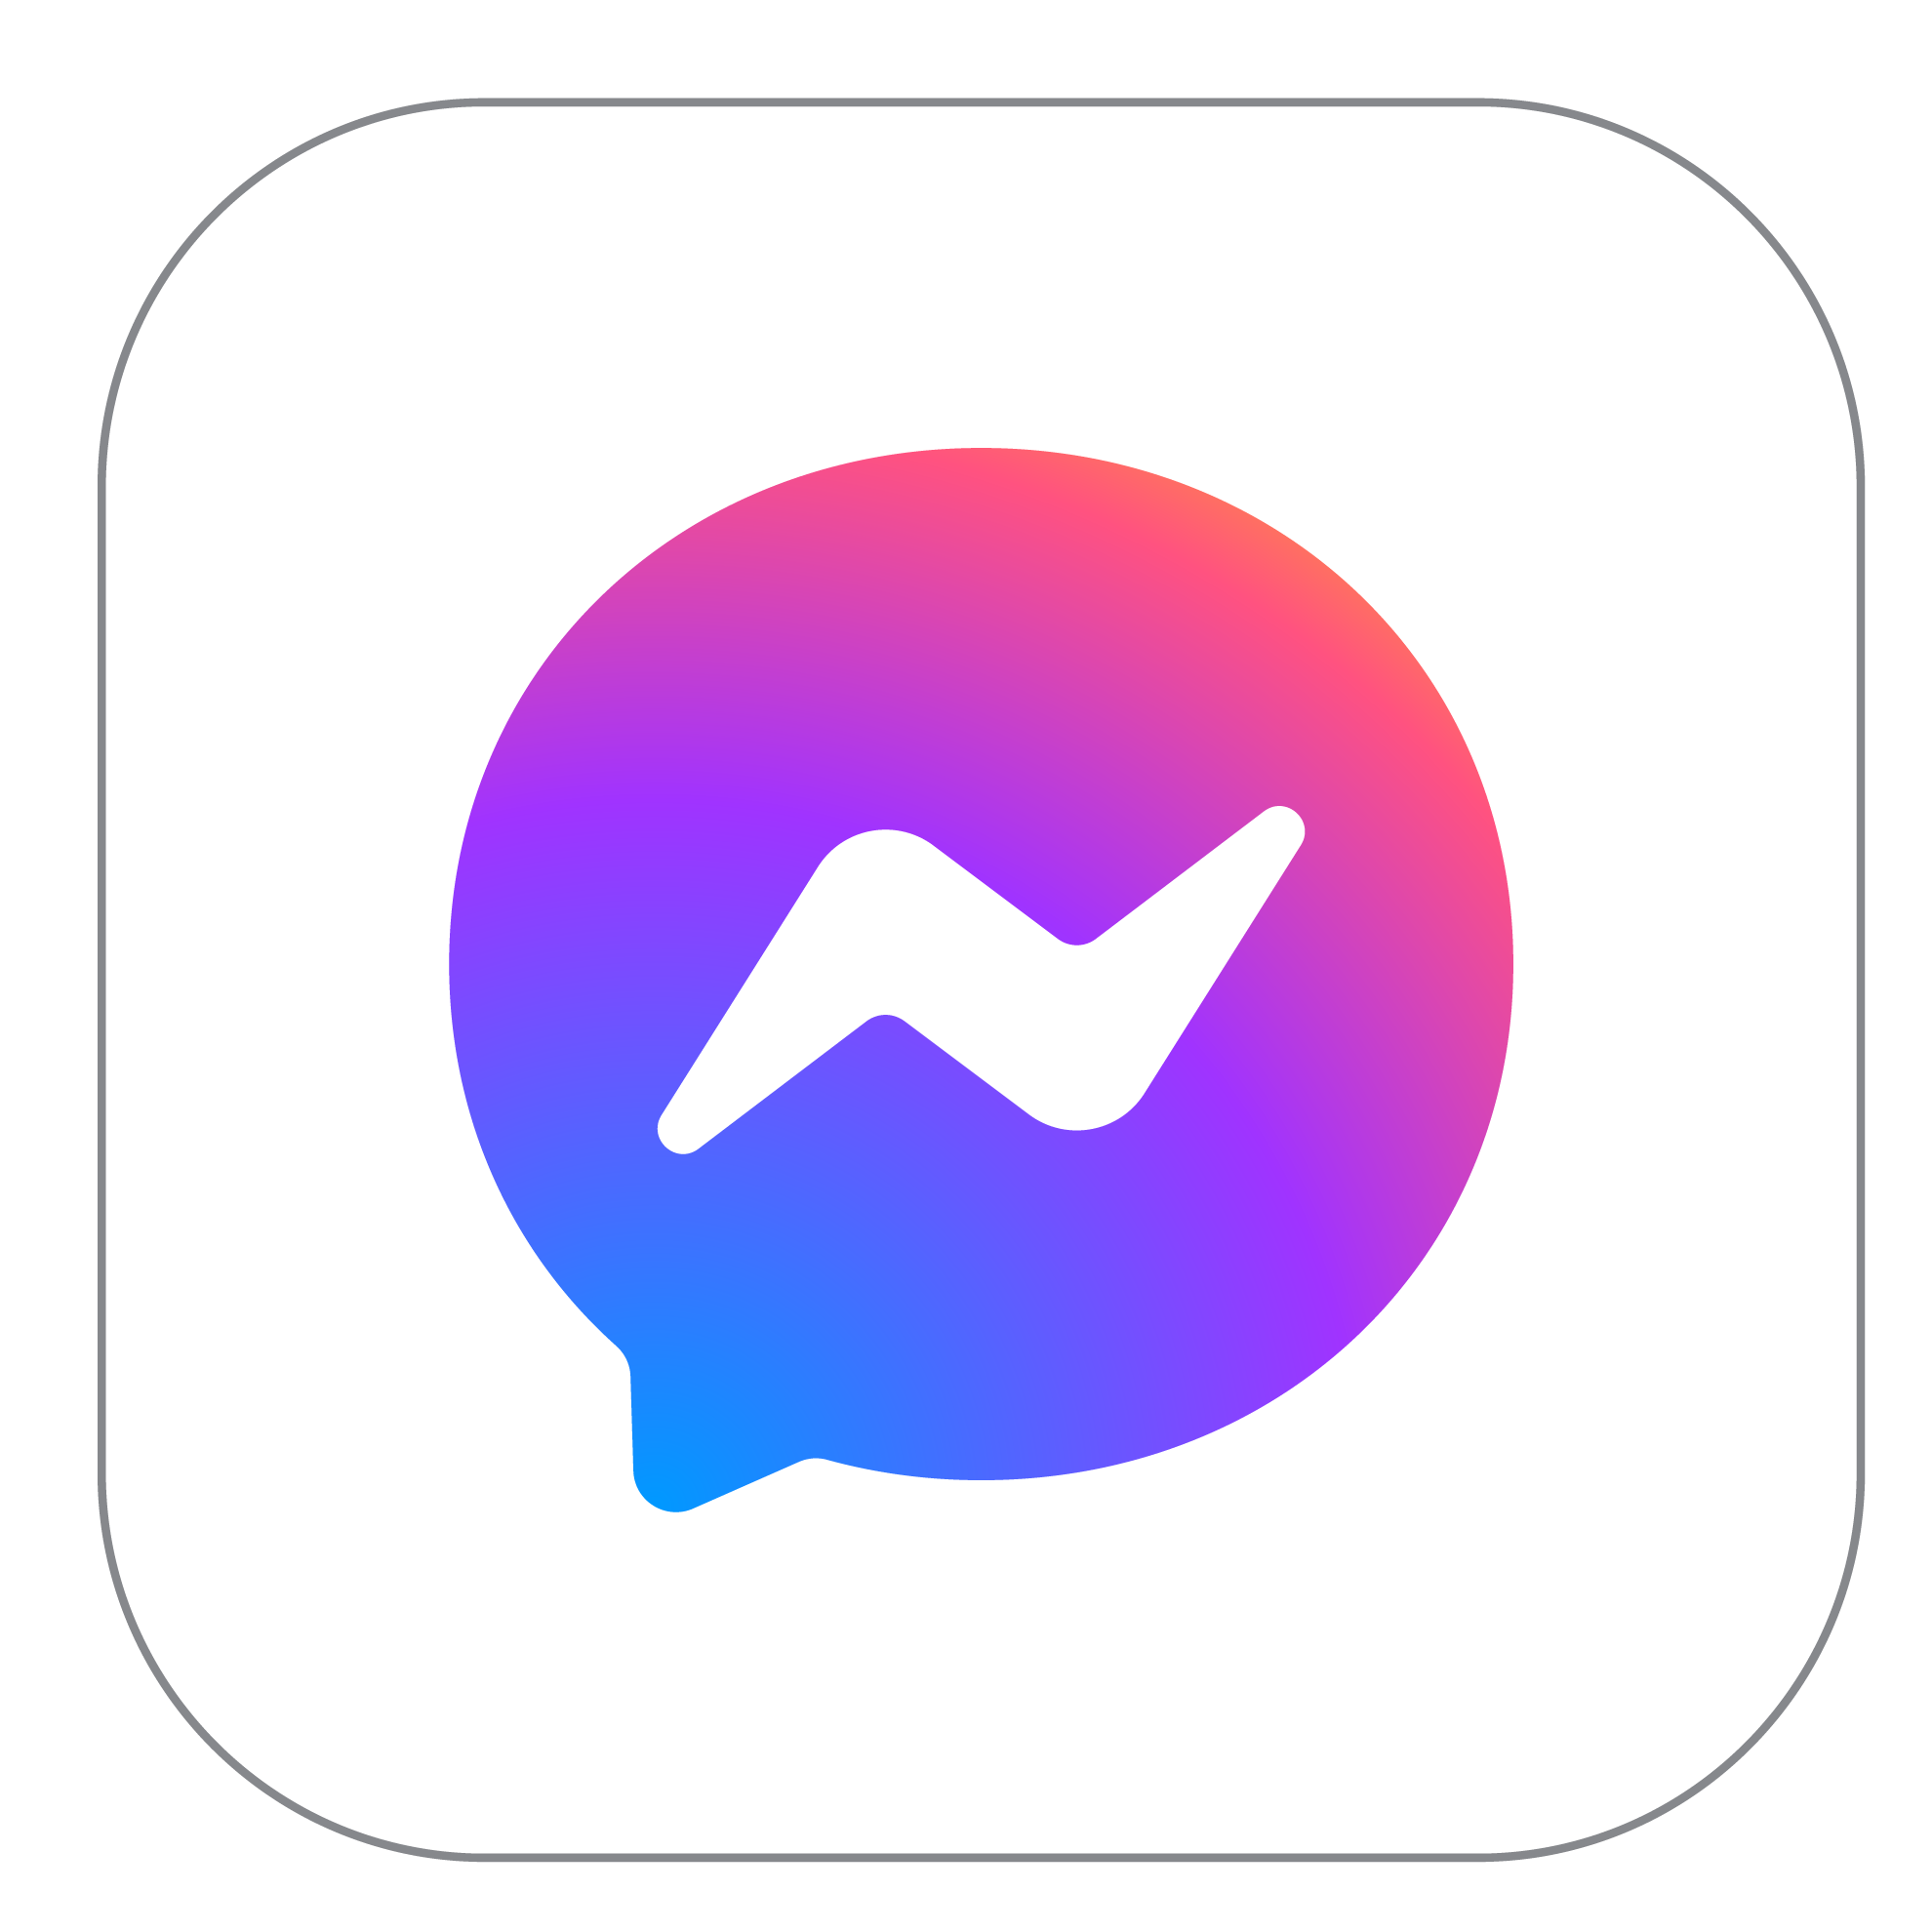 Logotipo Messenger con tu recarga telefónica Movistar prepago ilimitado